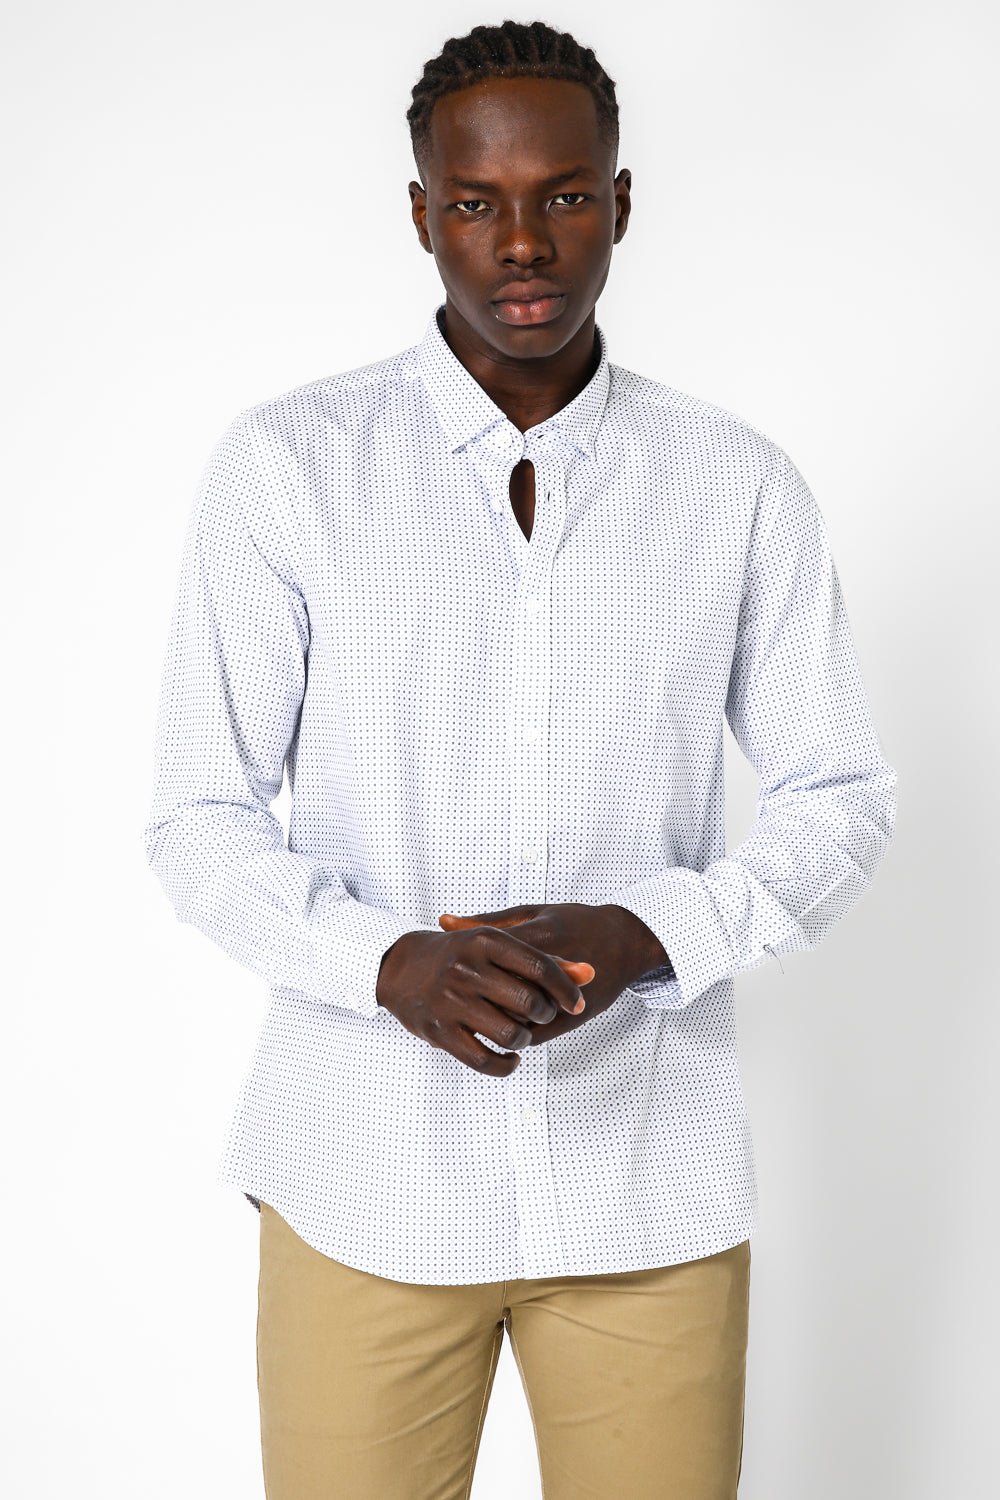 KENNETH COLE - חולצה מכופתרת כותנה בצבע לבן בעיטורים - MASHBIR//365